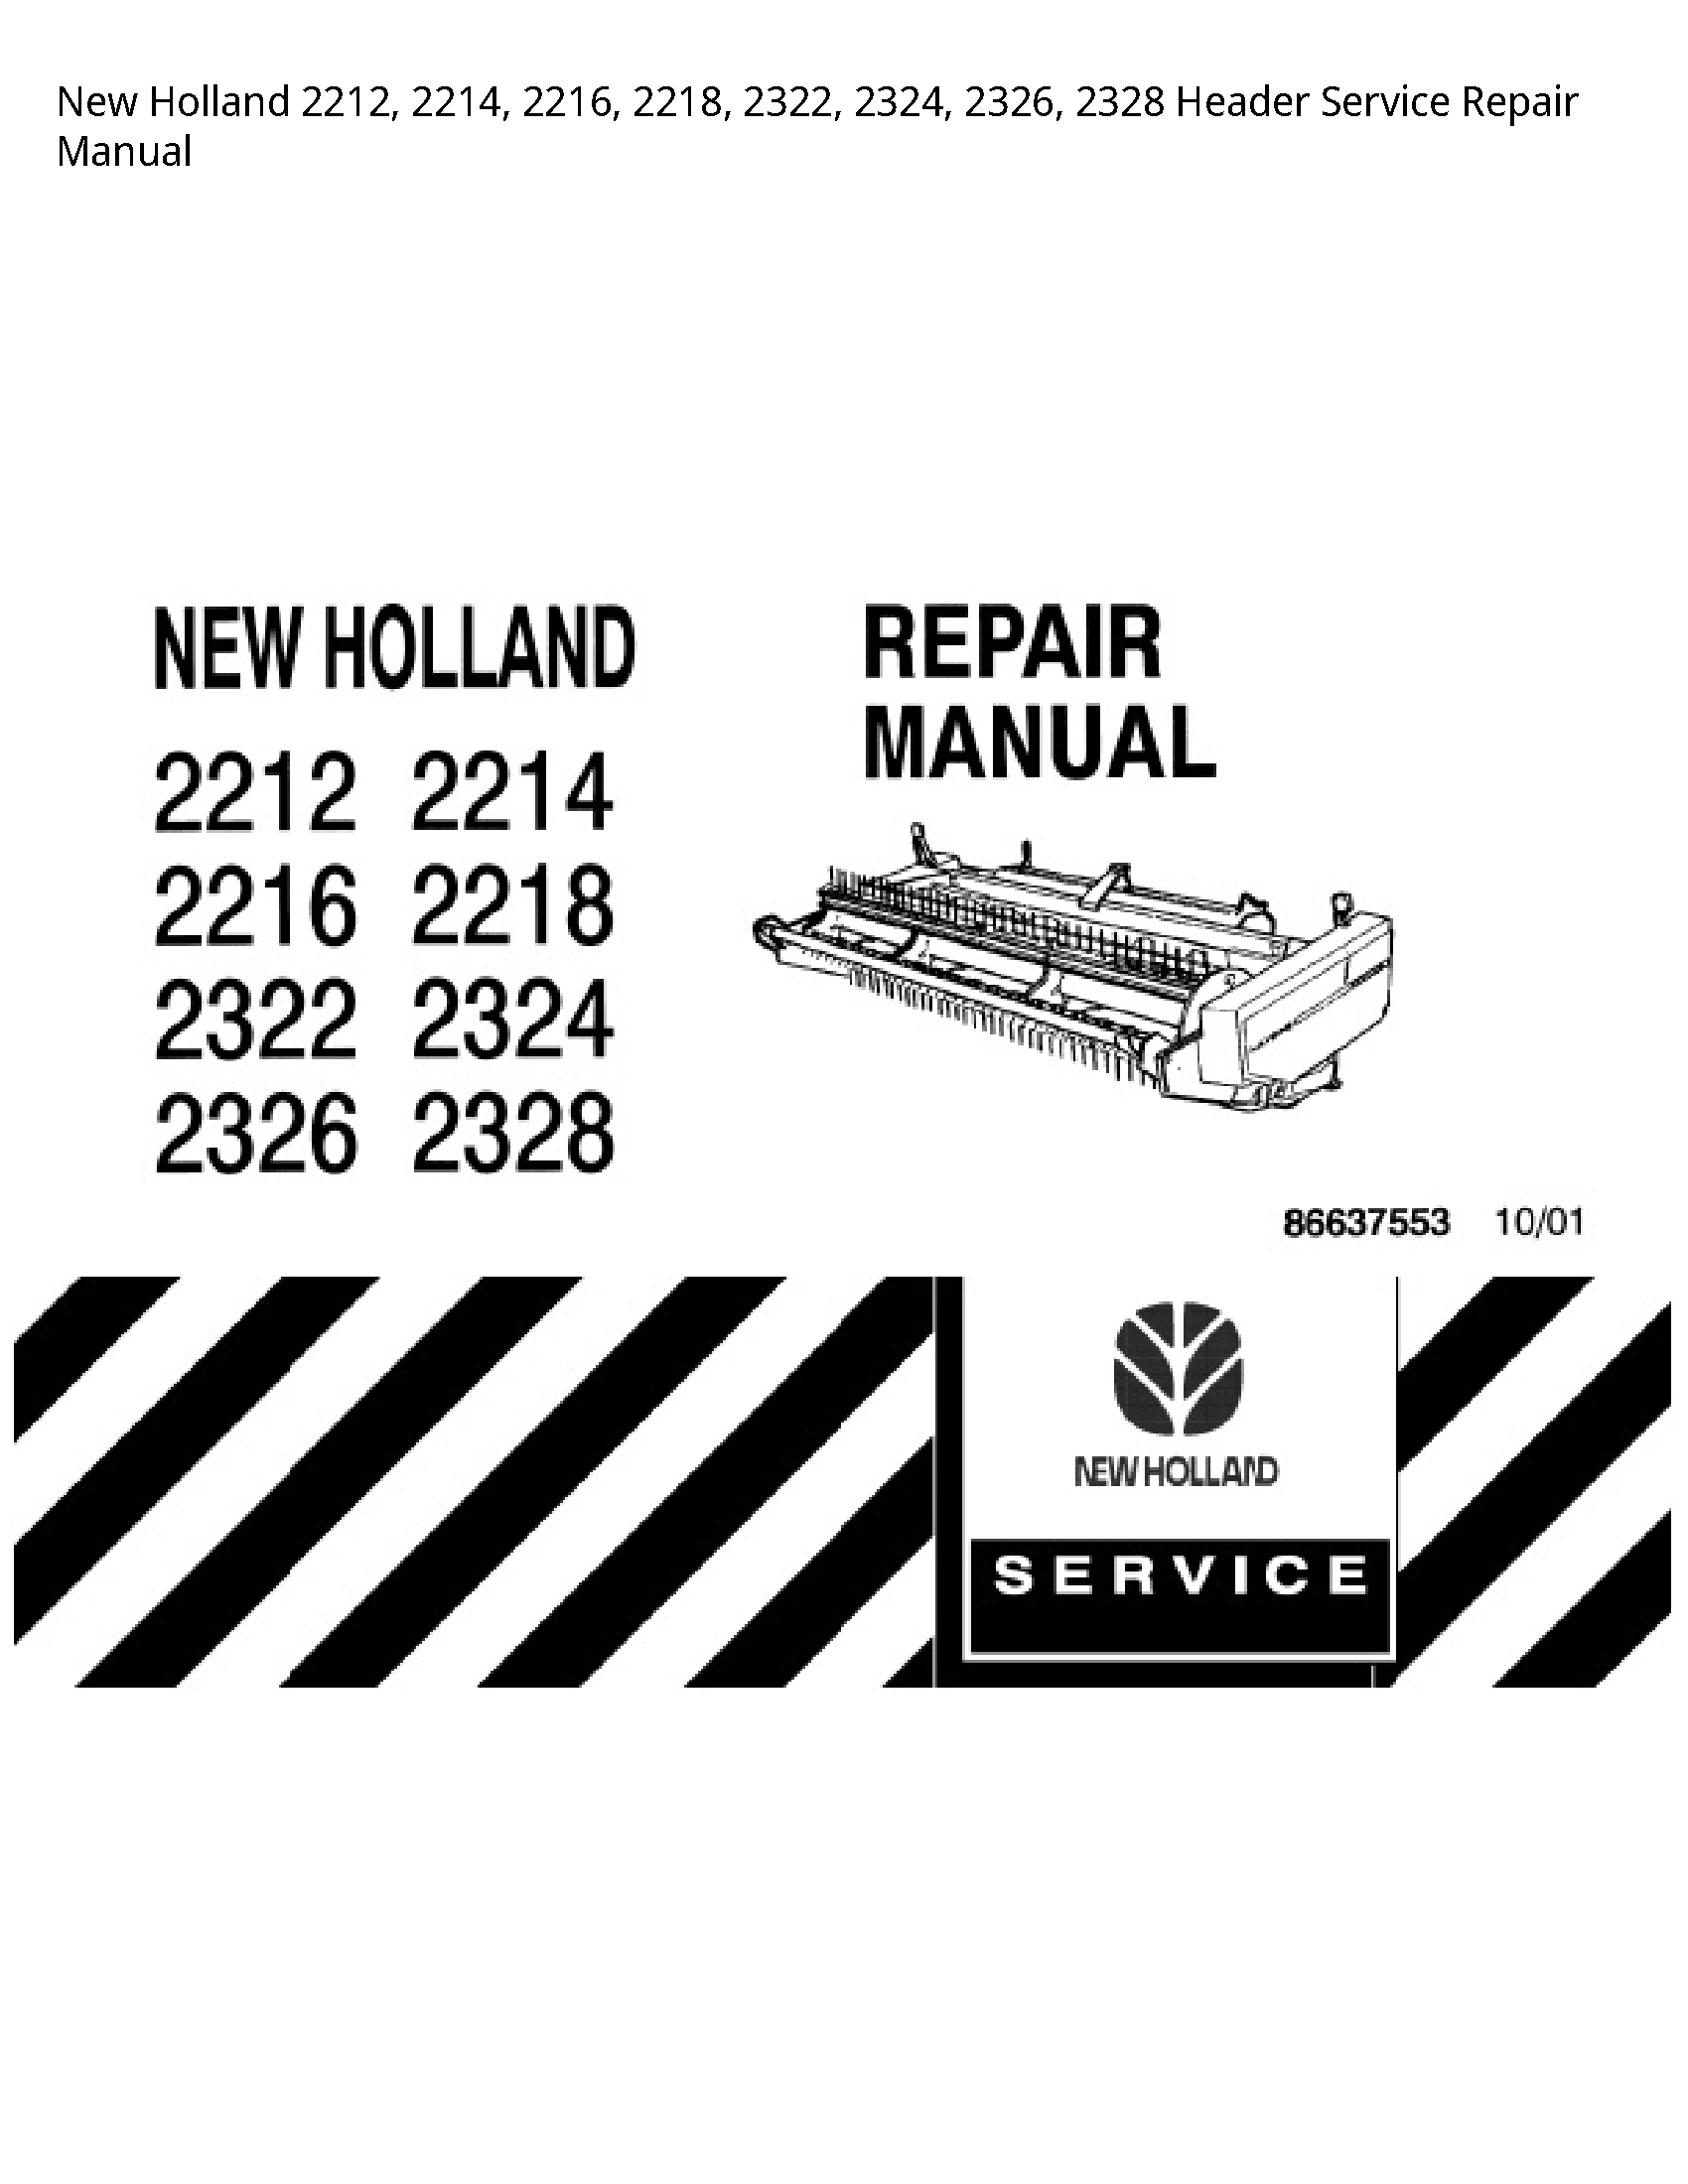 New Holland 2212 Header manual